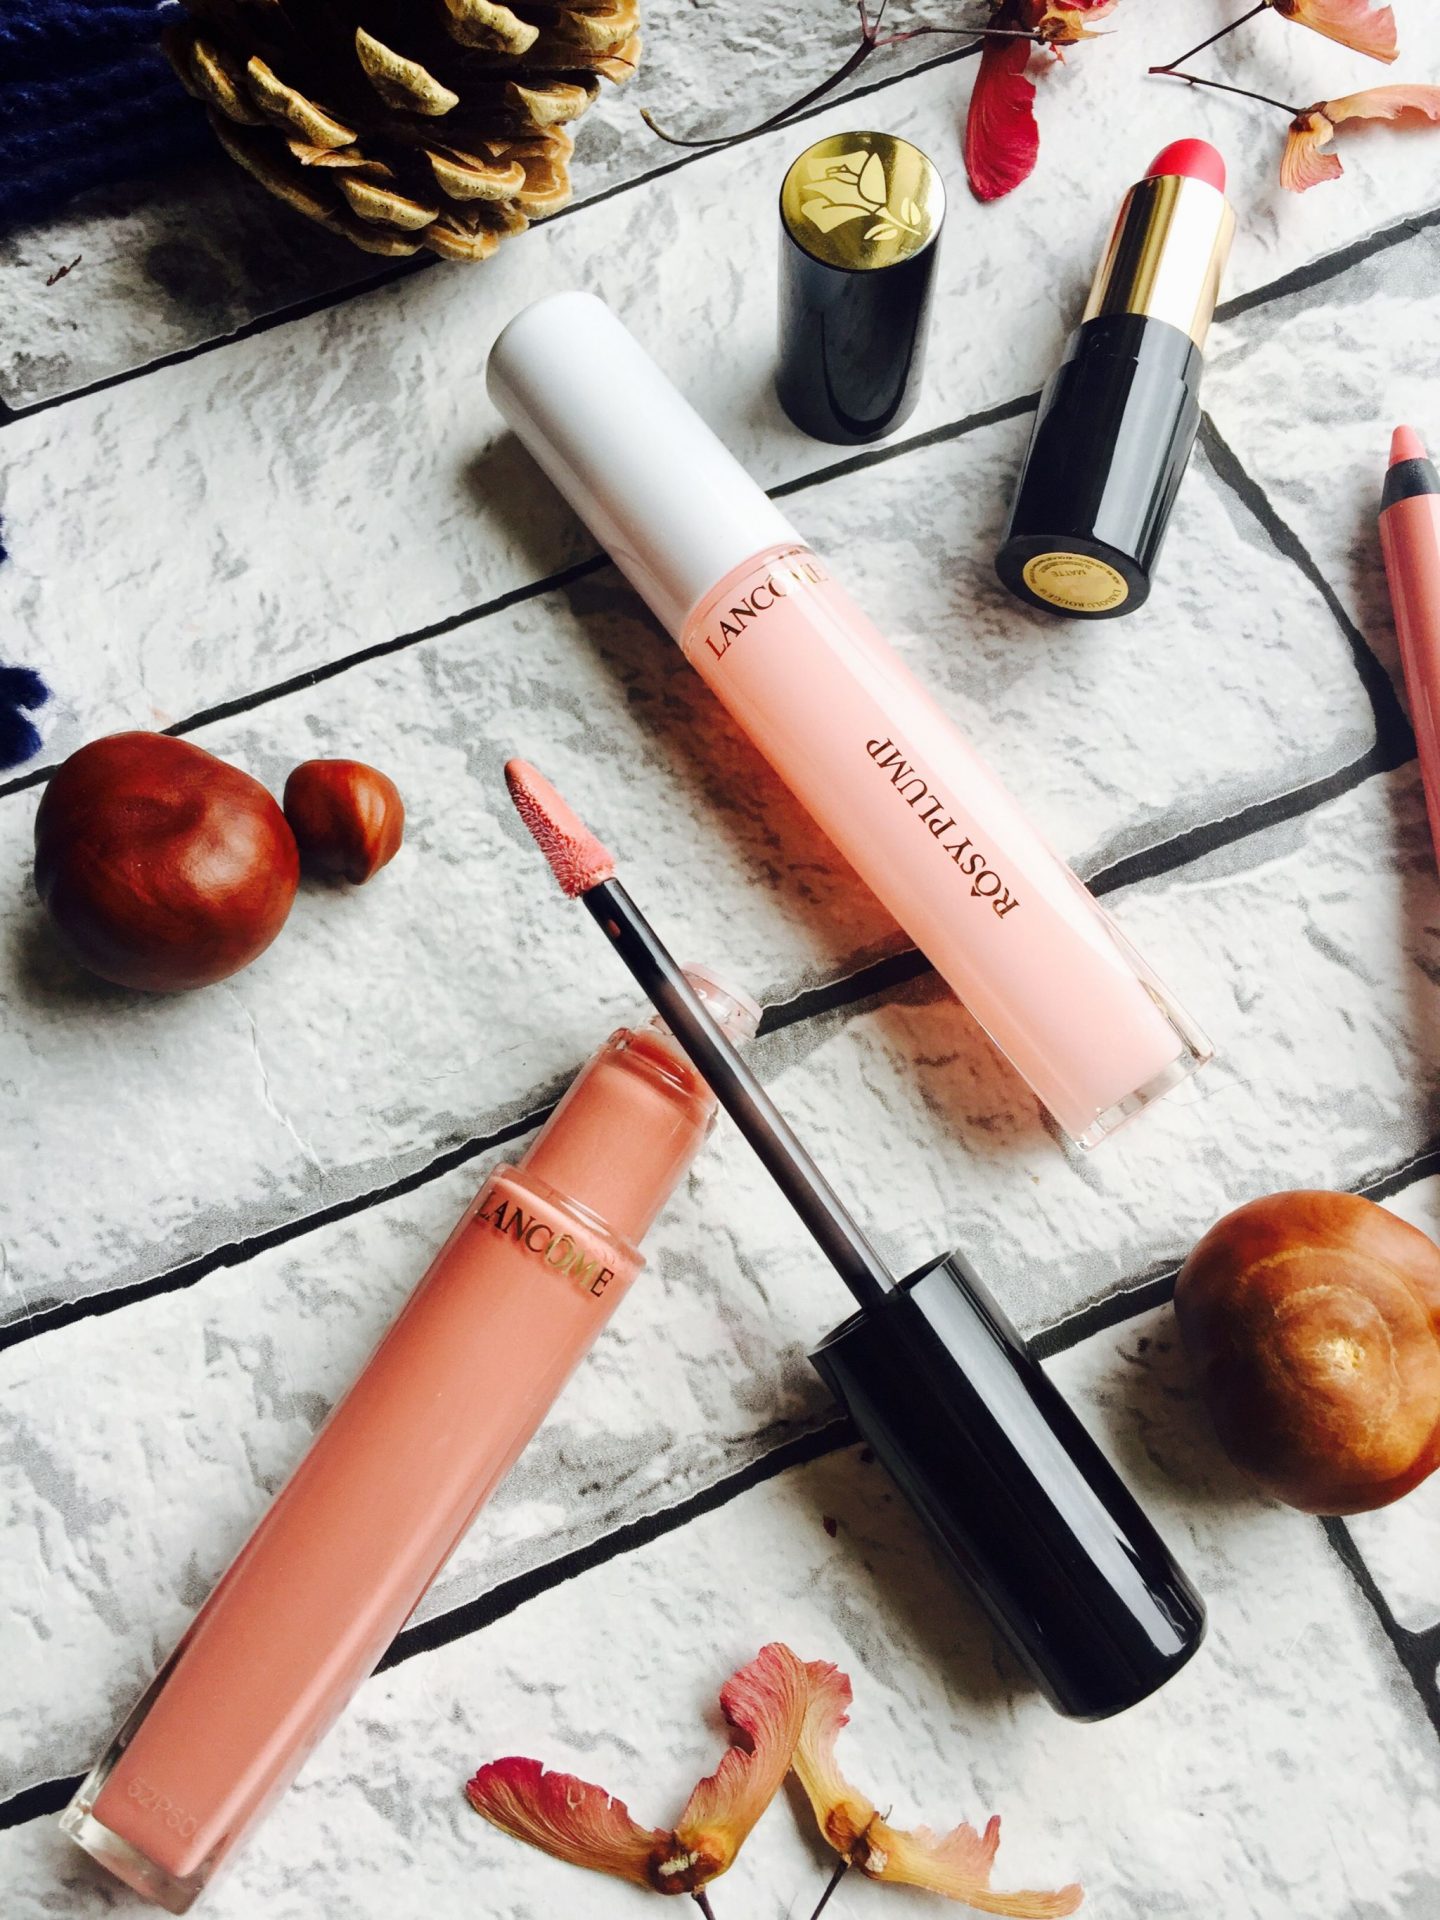 Lancôme L'Absolu New releases lipstick lip gloss cream liner